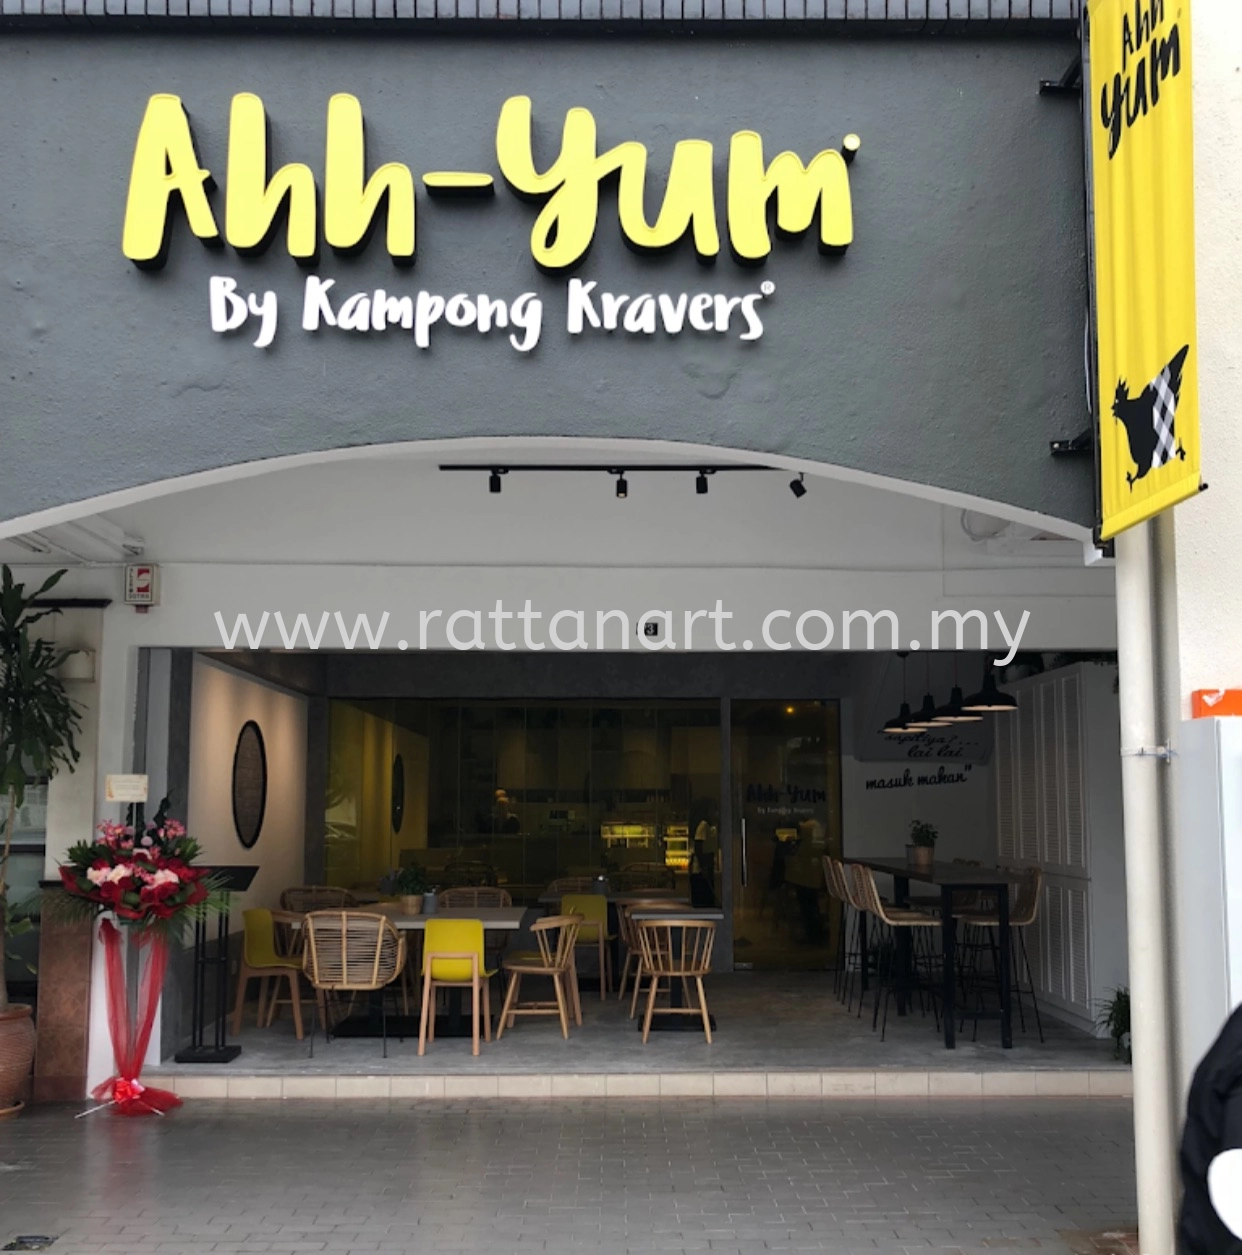 Supply to Ahh Yum By Kampong Kravers @ Bukit Damansara By Rattan Art.